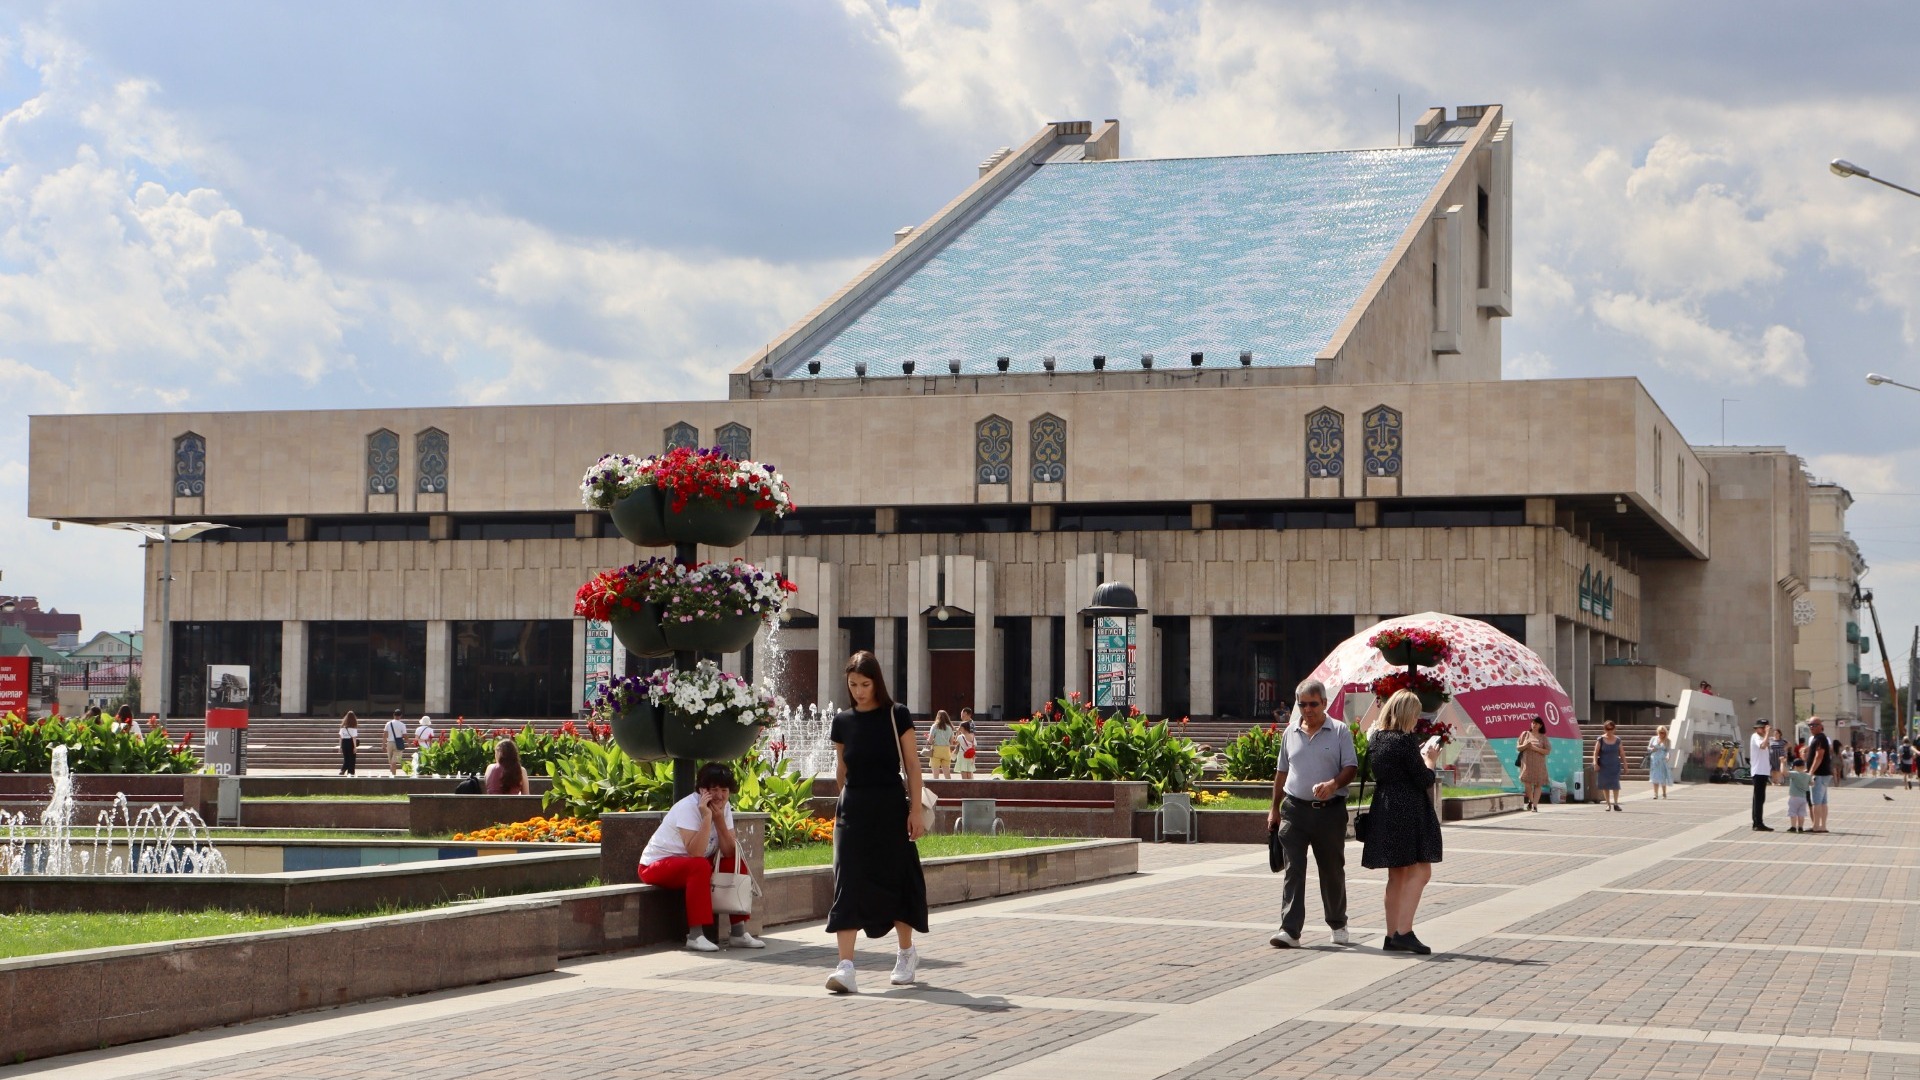 Состояние площади перед театром Камала в Казани — фото